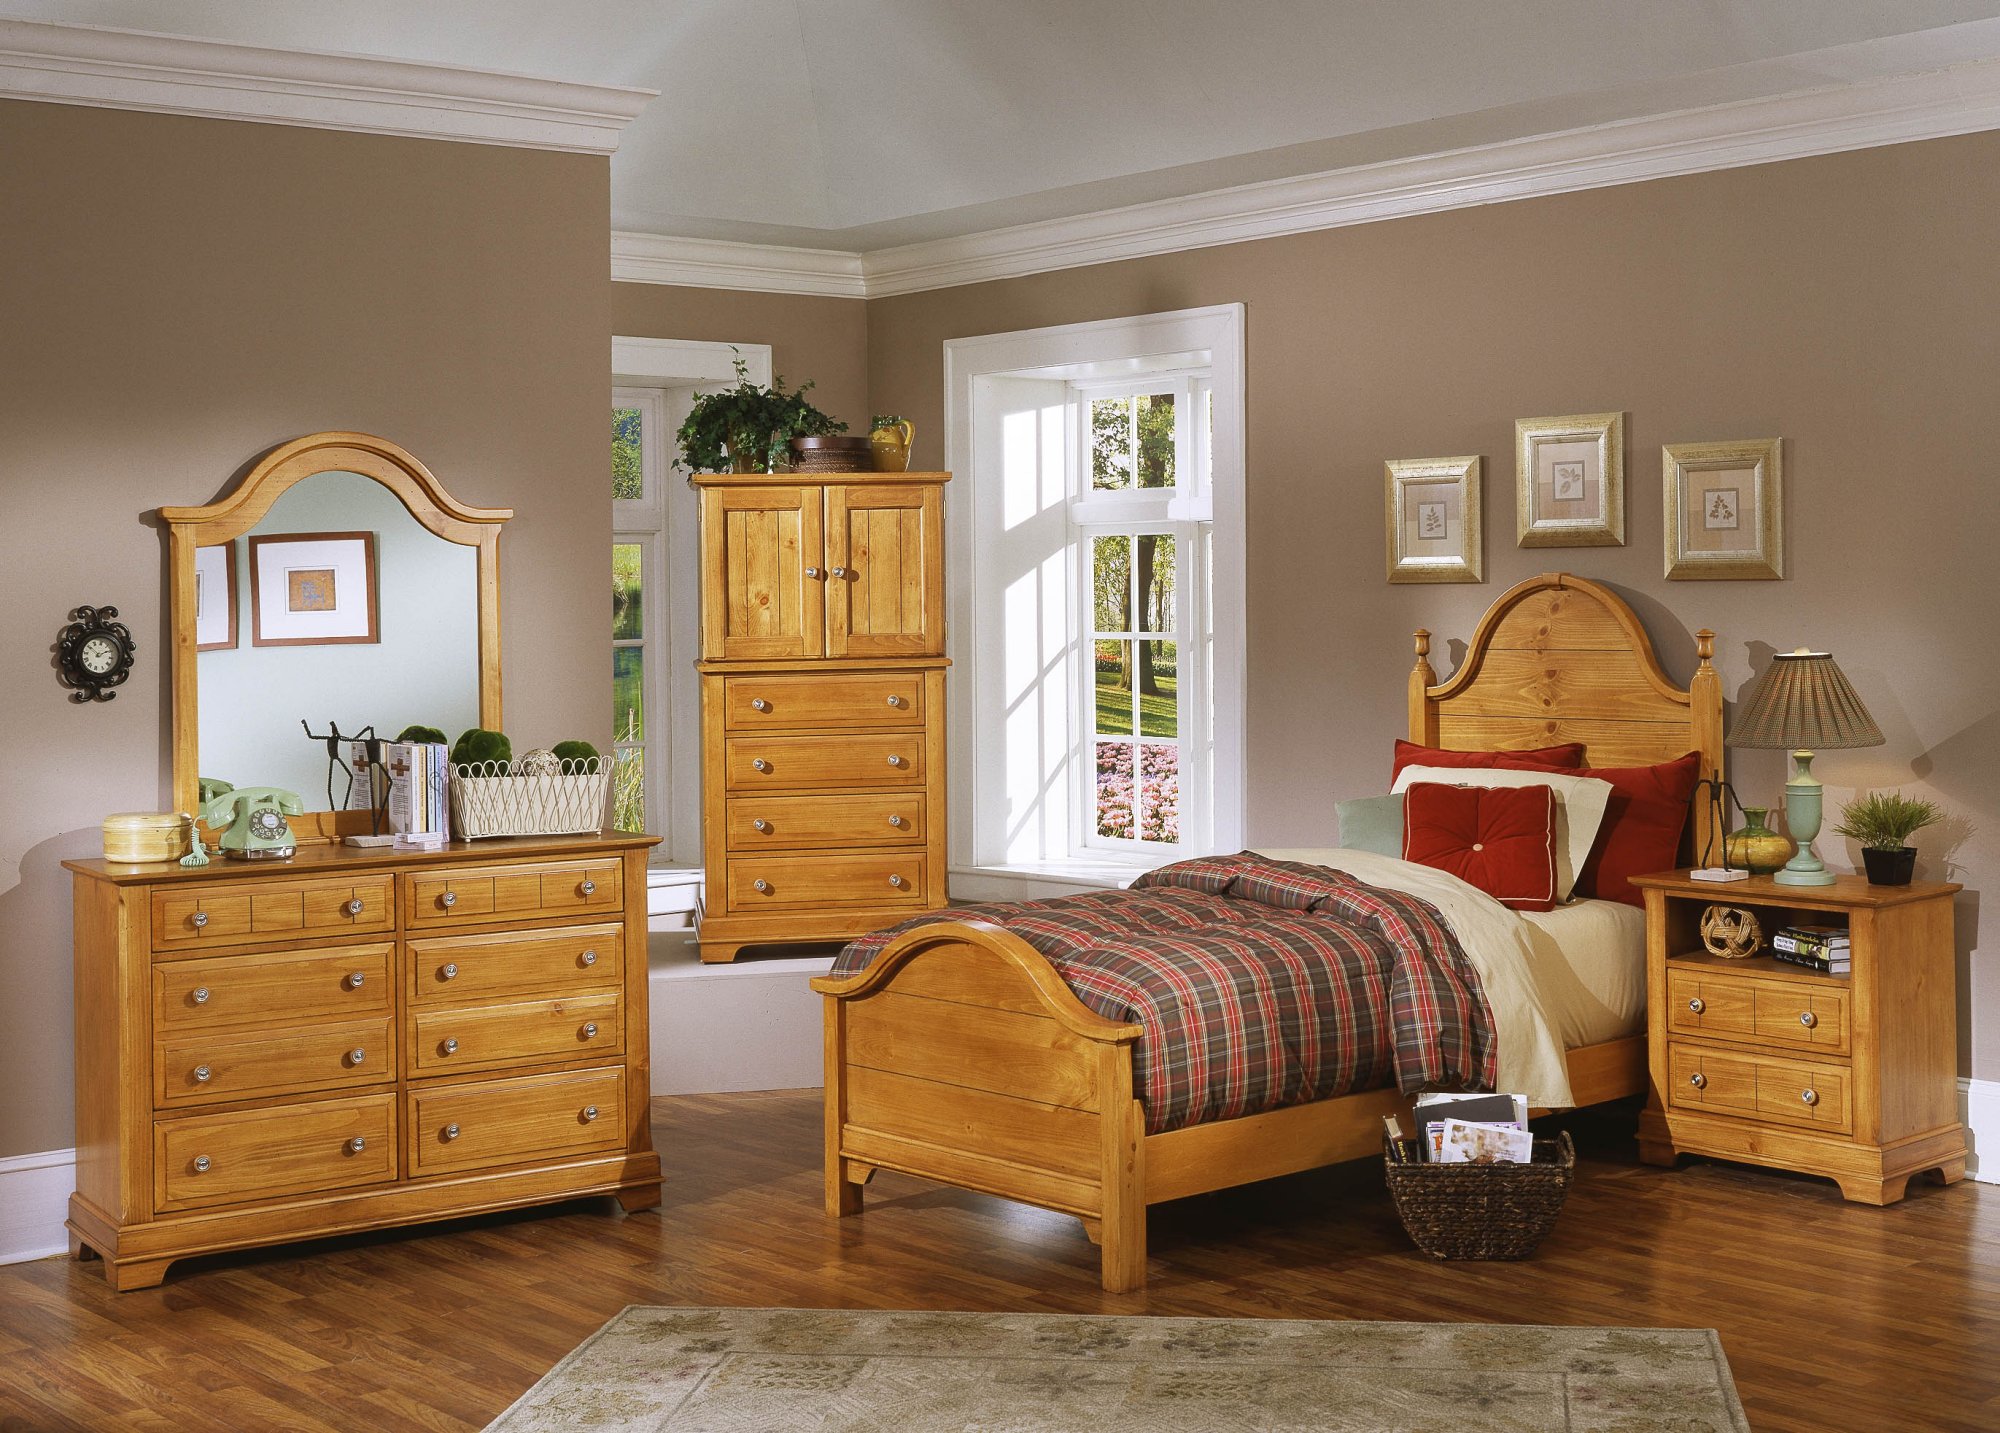 pine bedroom furniture decorating ideas photo - 10